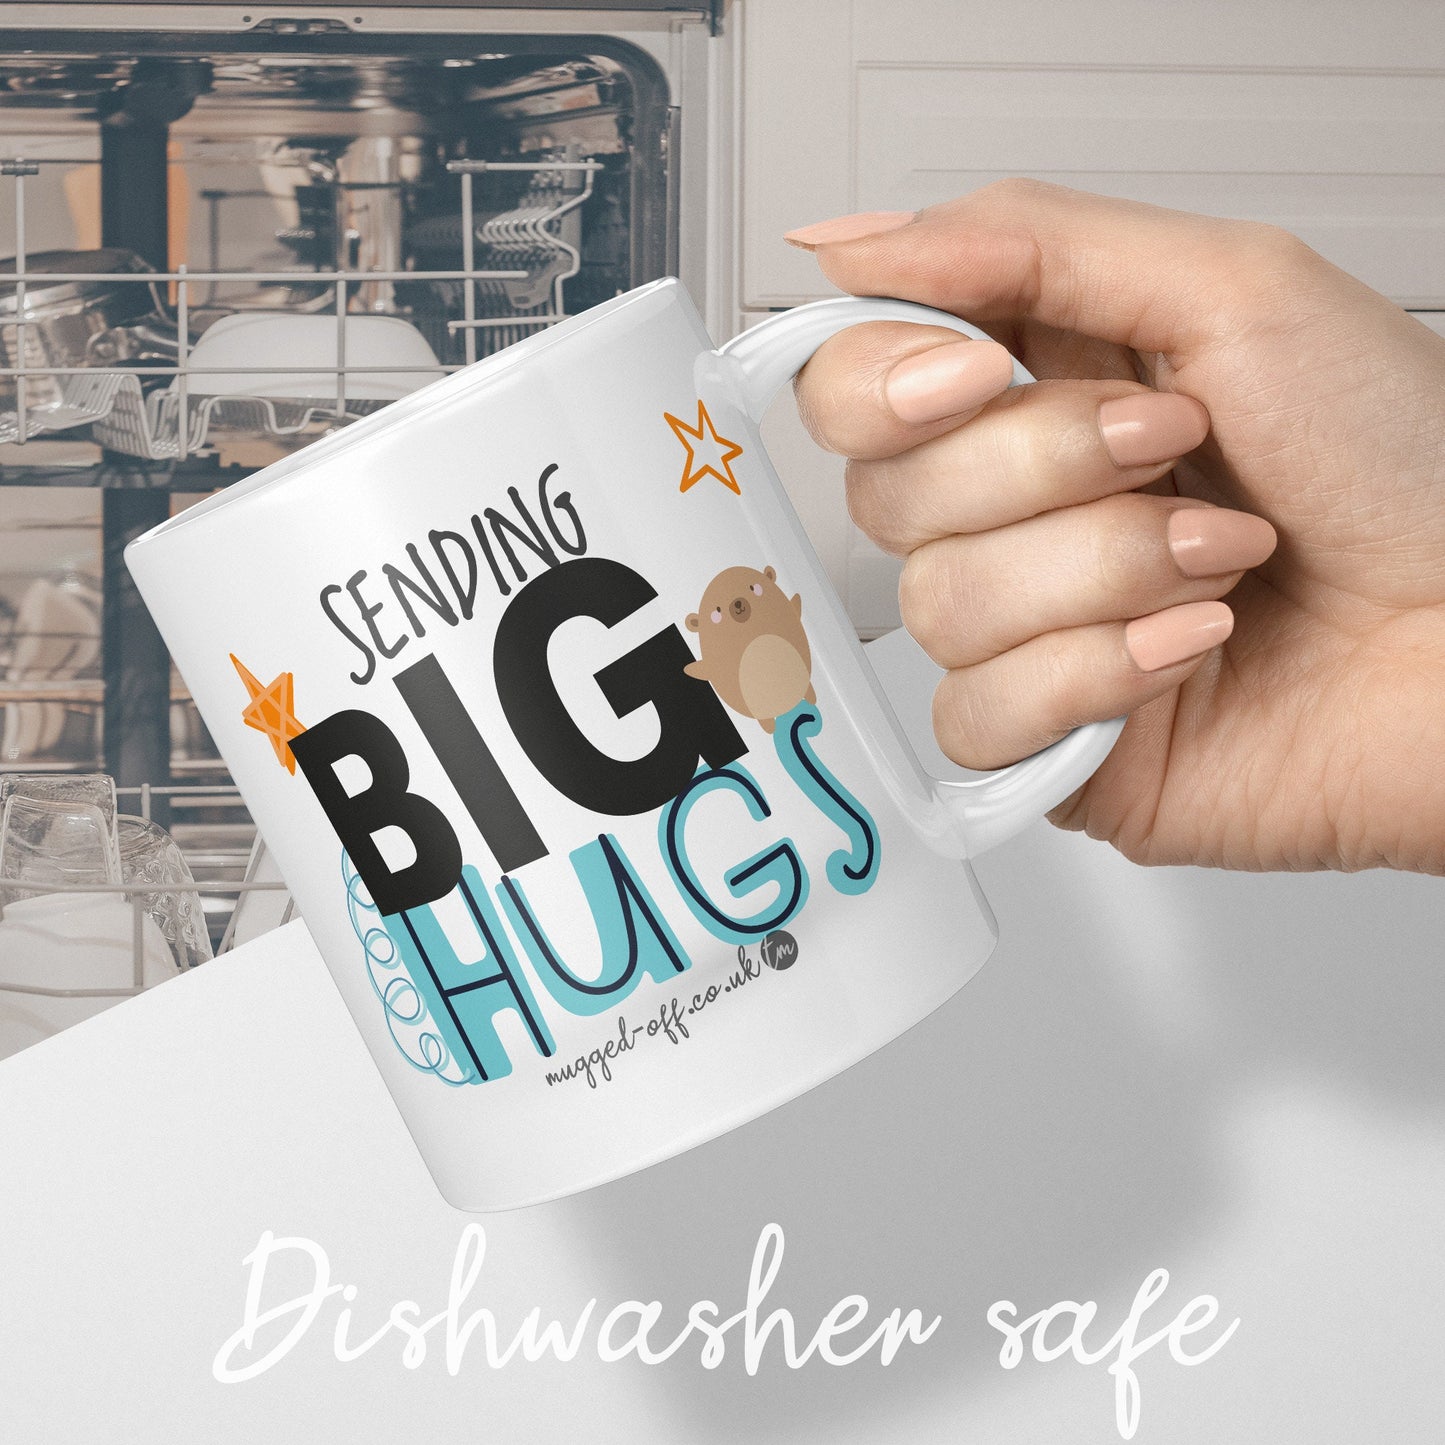 Get well gift thinking of you present big hugs mug